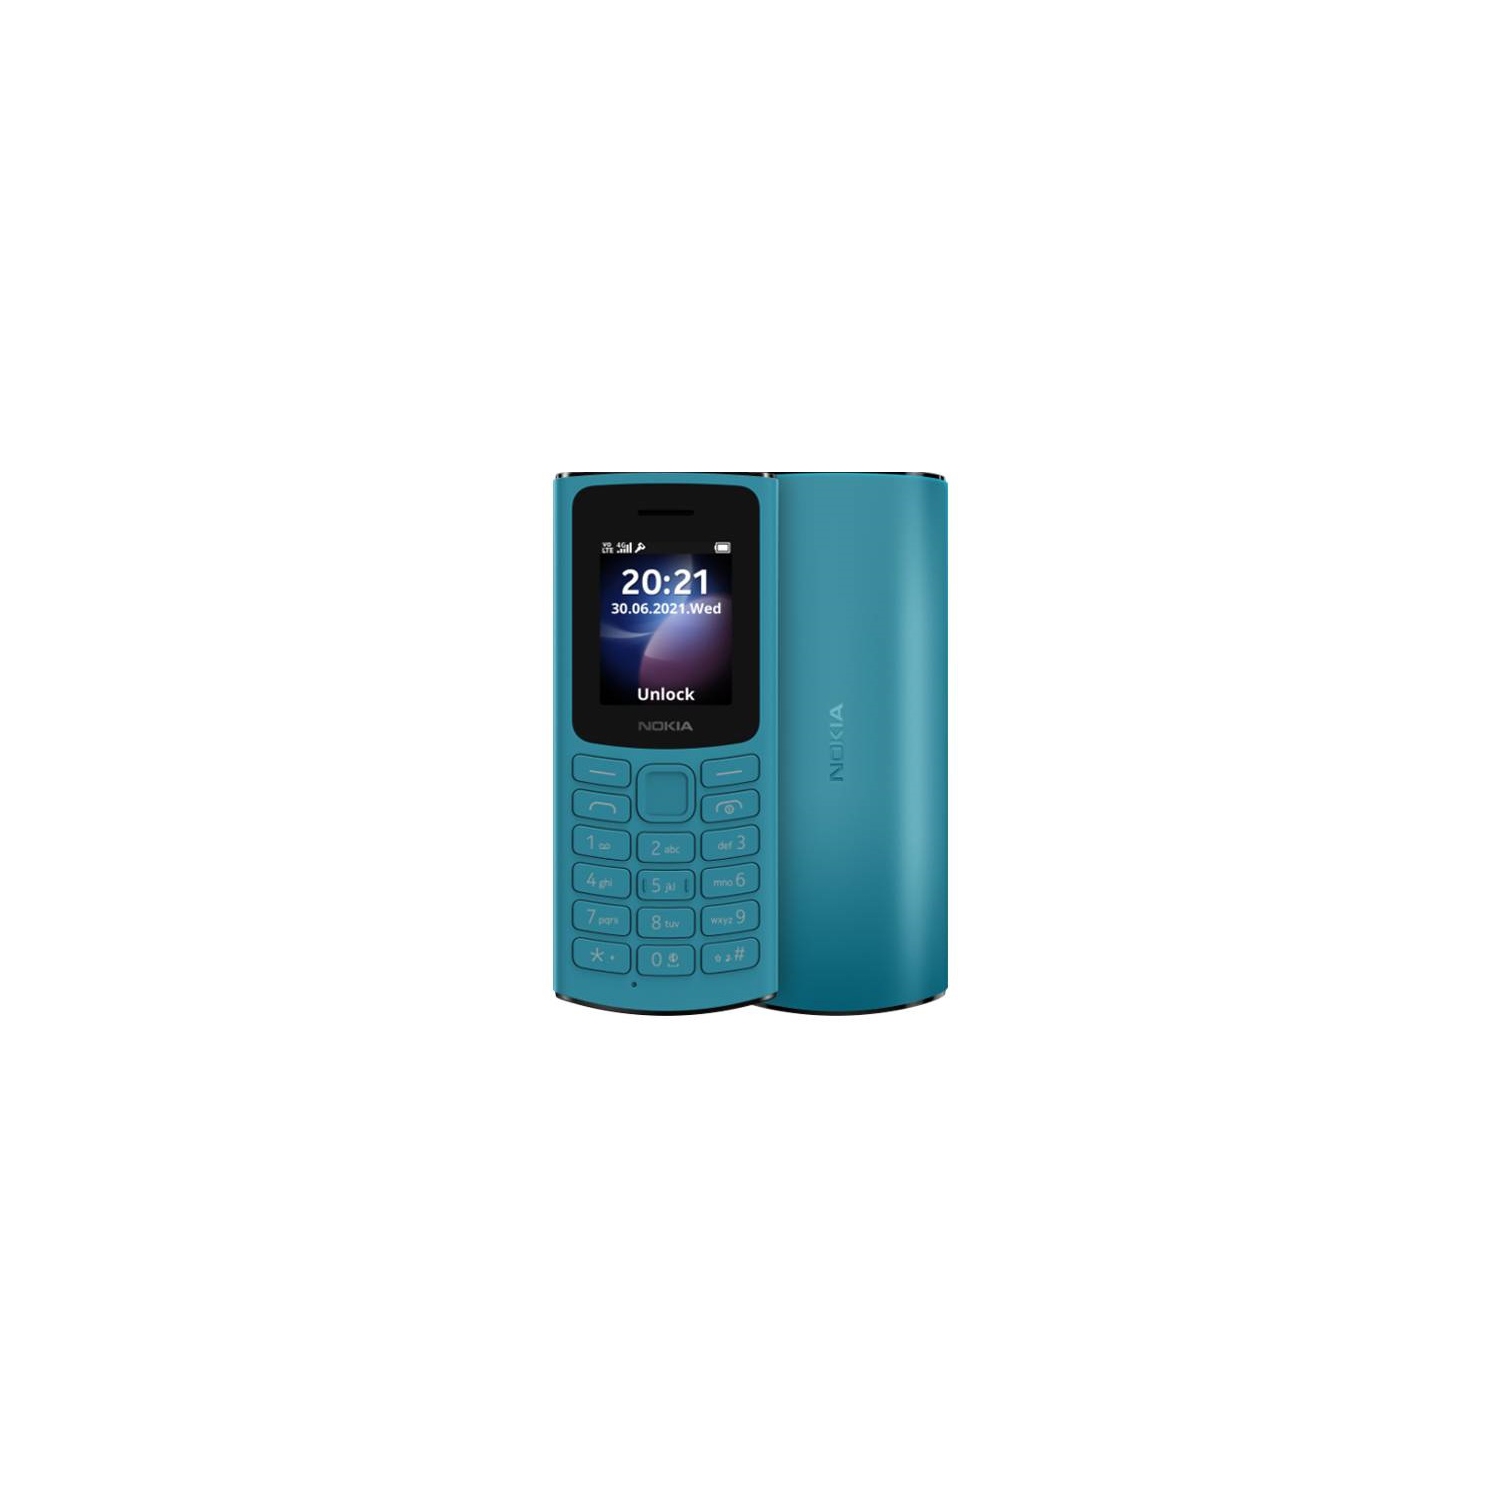 Nokia 105 TA-1385 4G Dual SIM (Blue) - Brand New